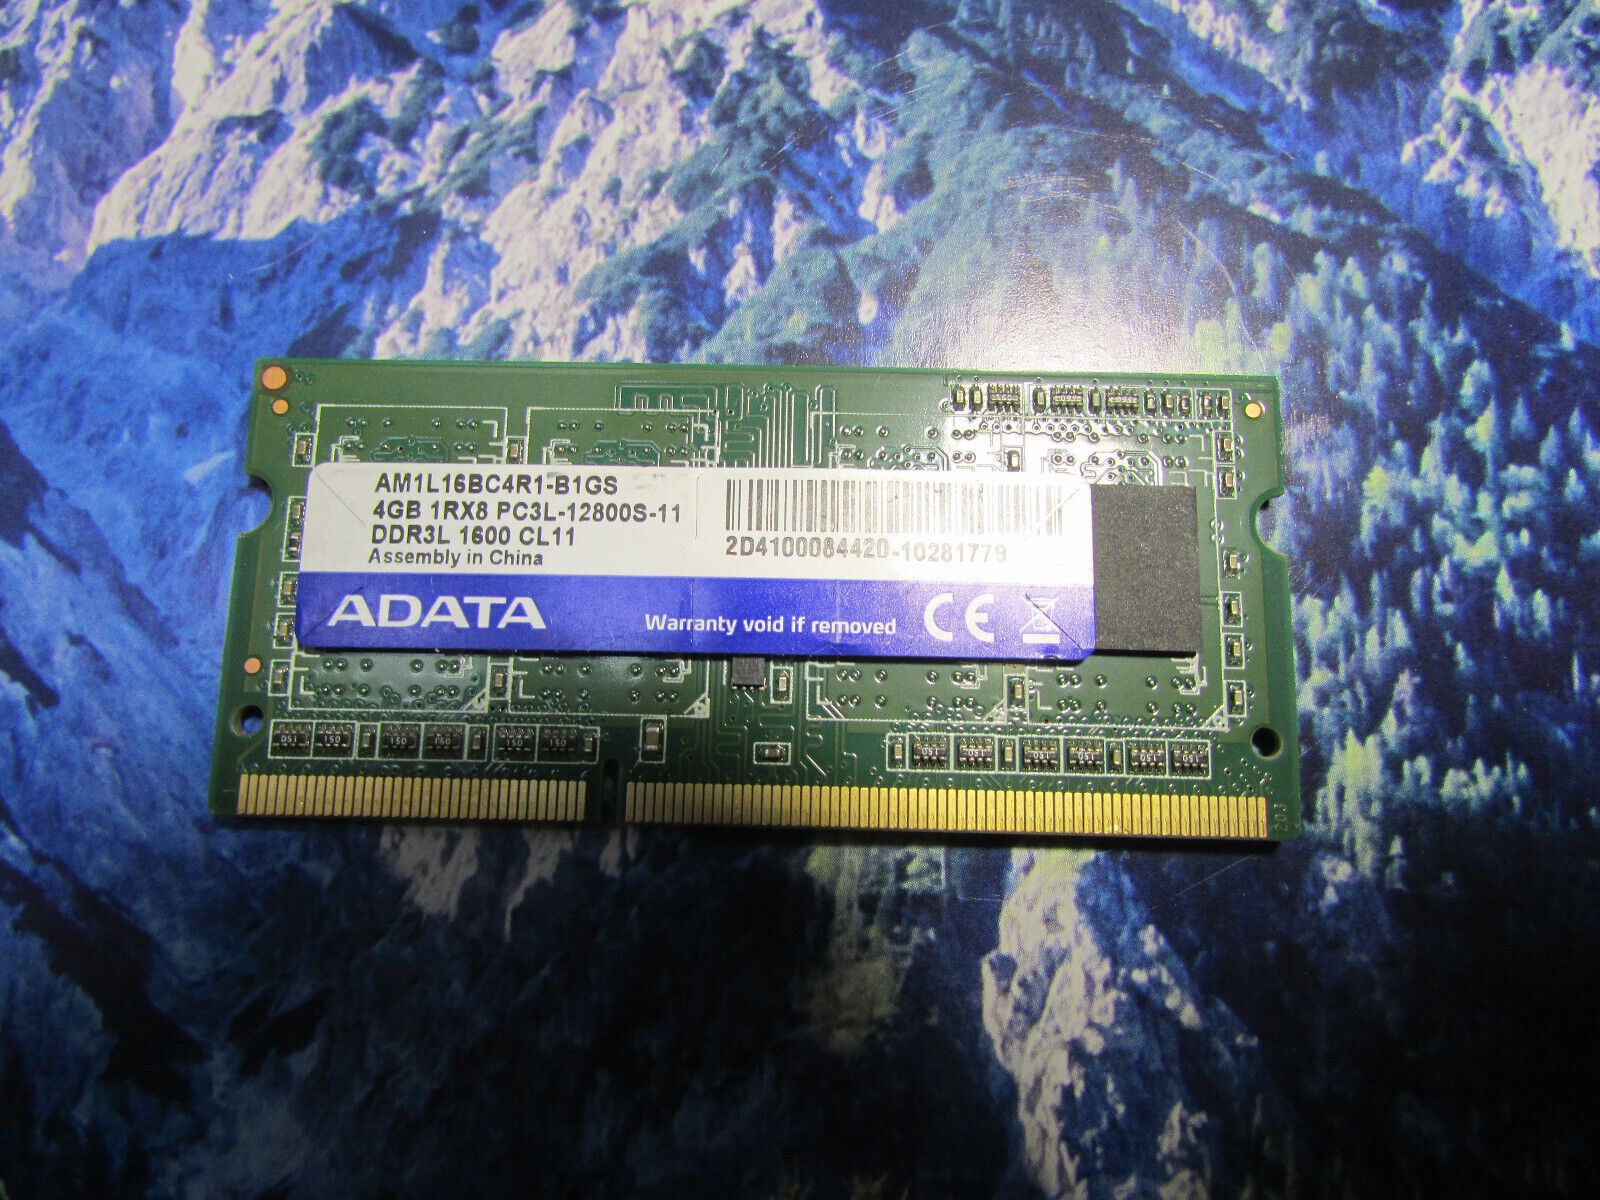 HP 15-p043cl ADATA 4Gb 1rx8 pc3l-12800s RAM SO-DIMM AM1L116BC4R1-B1GS - SINGLE